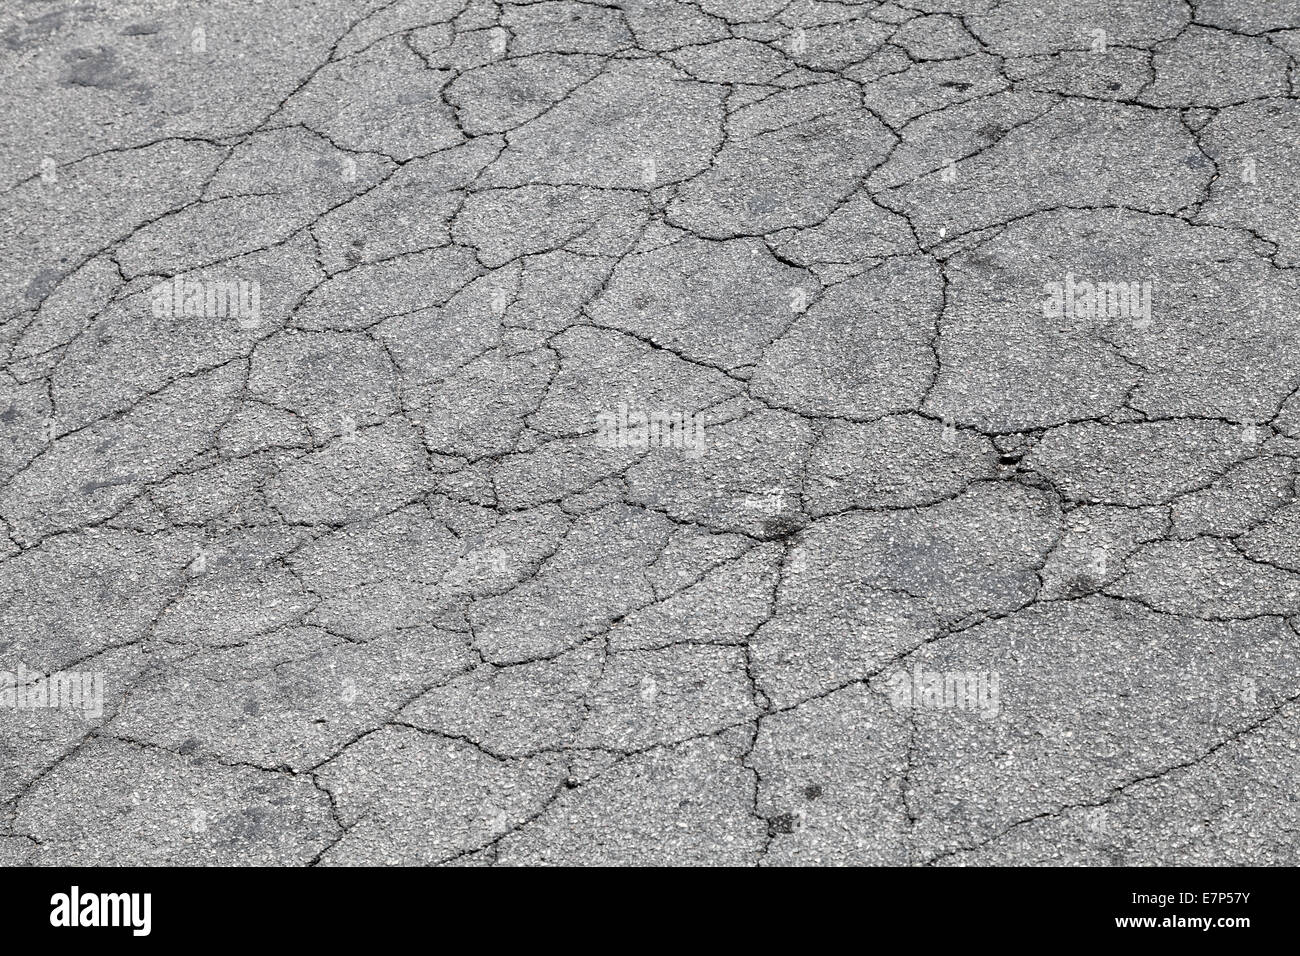 Grungy asphalt with cracks, urban background texture Stock Photo